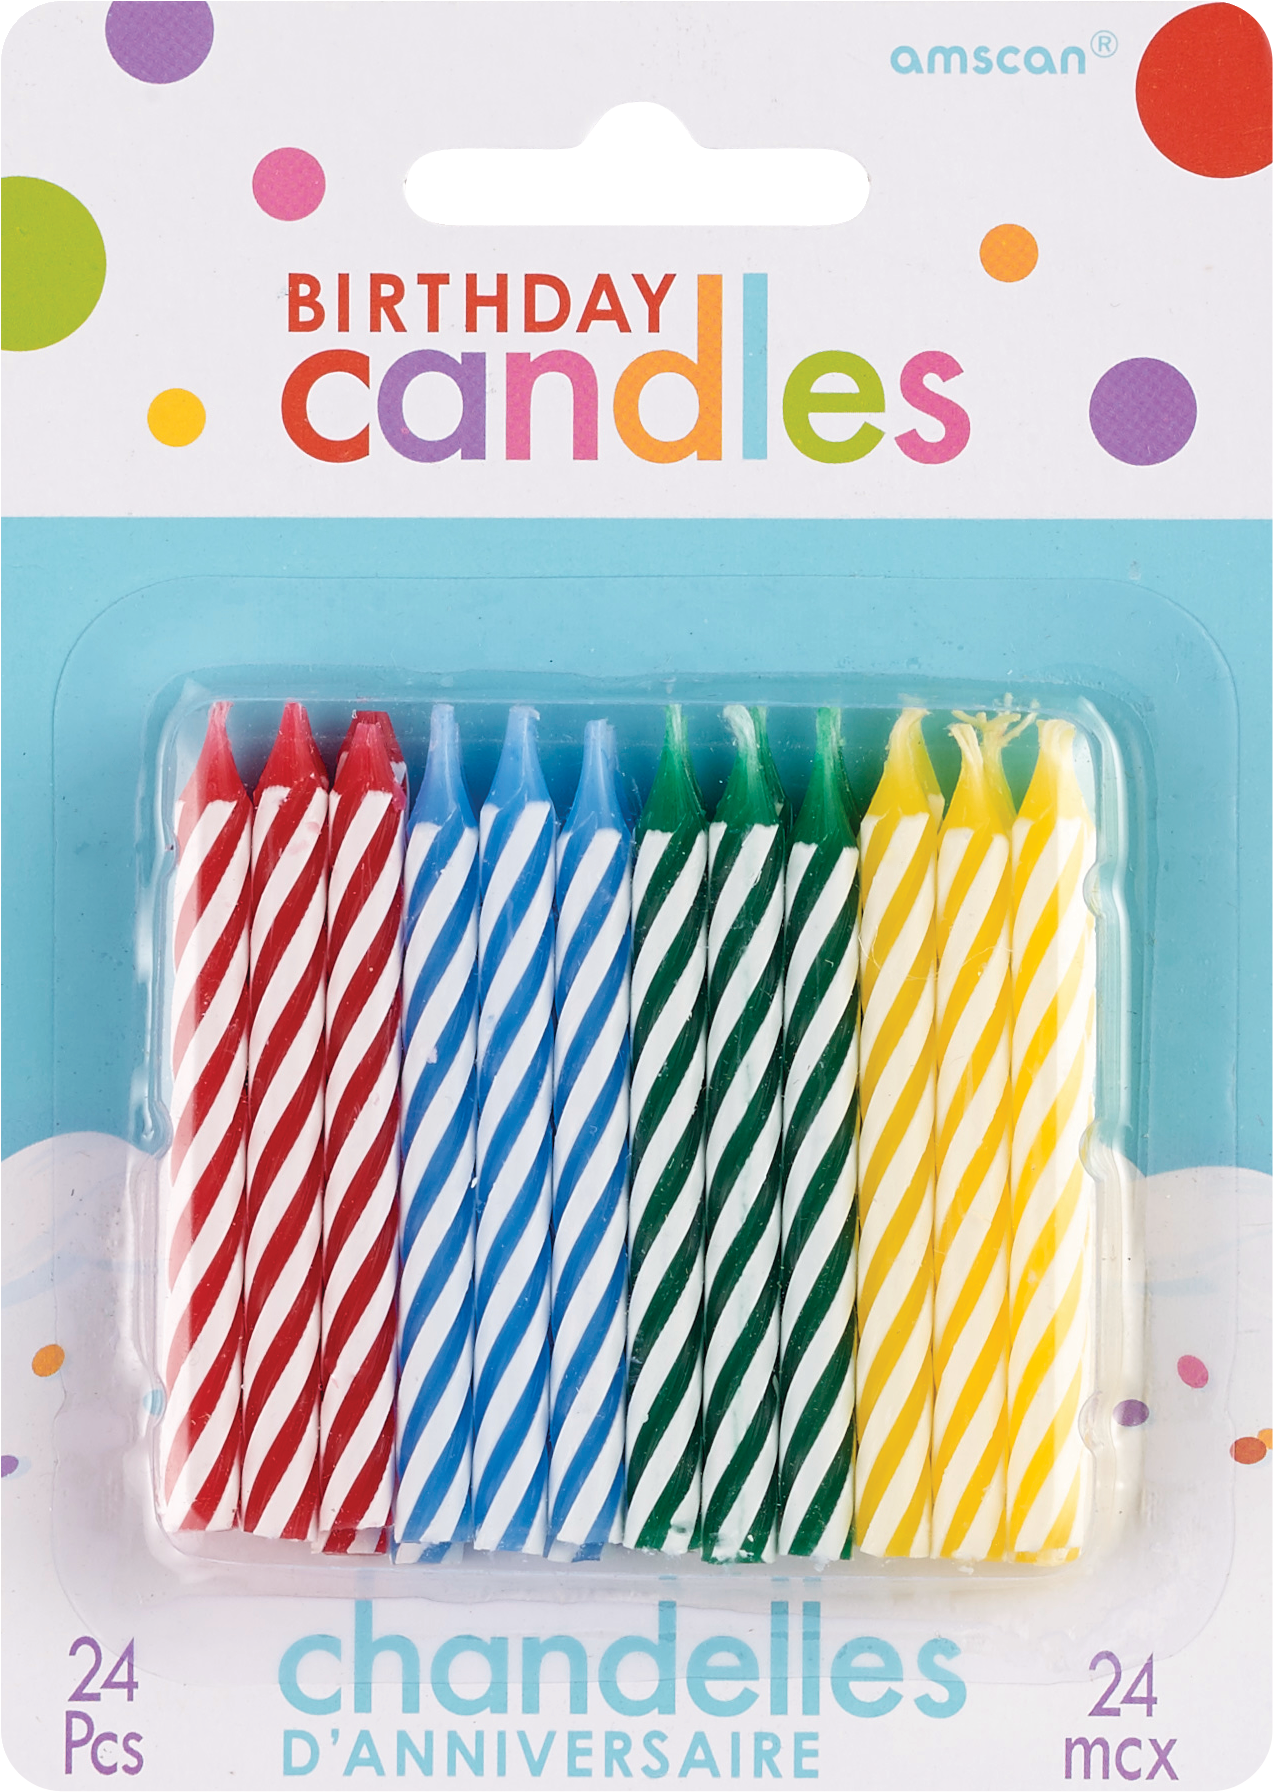 Amscan Birthday Candles, 24 ct